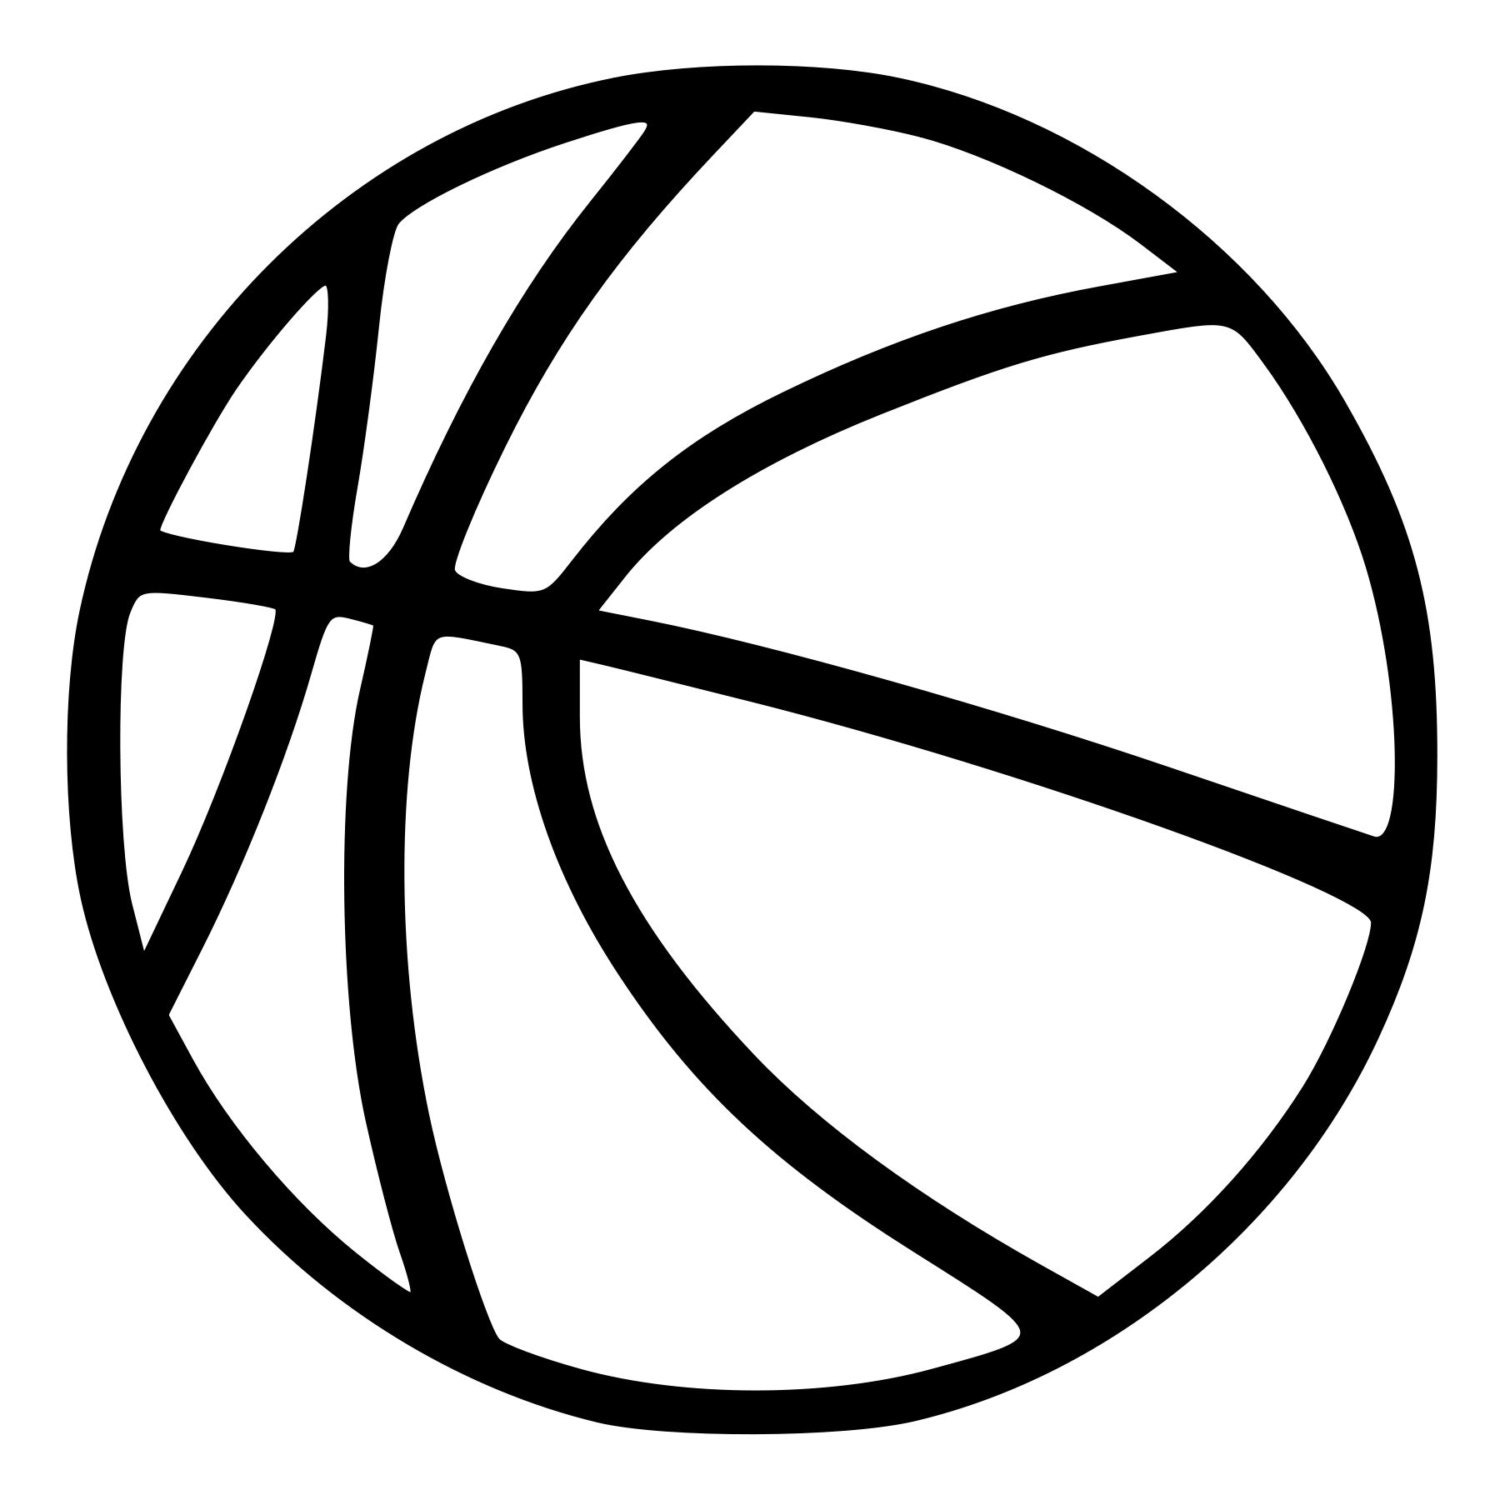 basketball outline